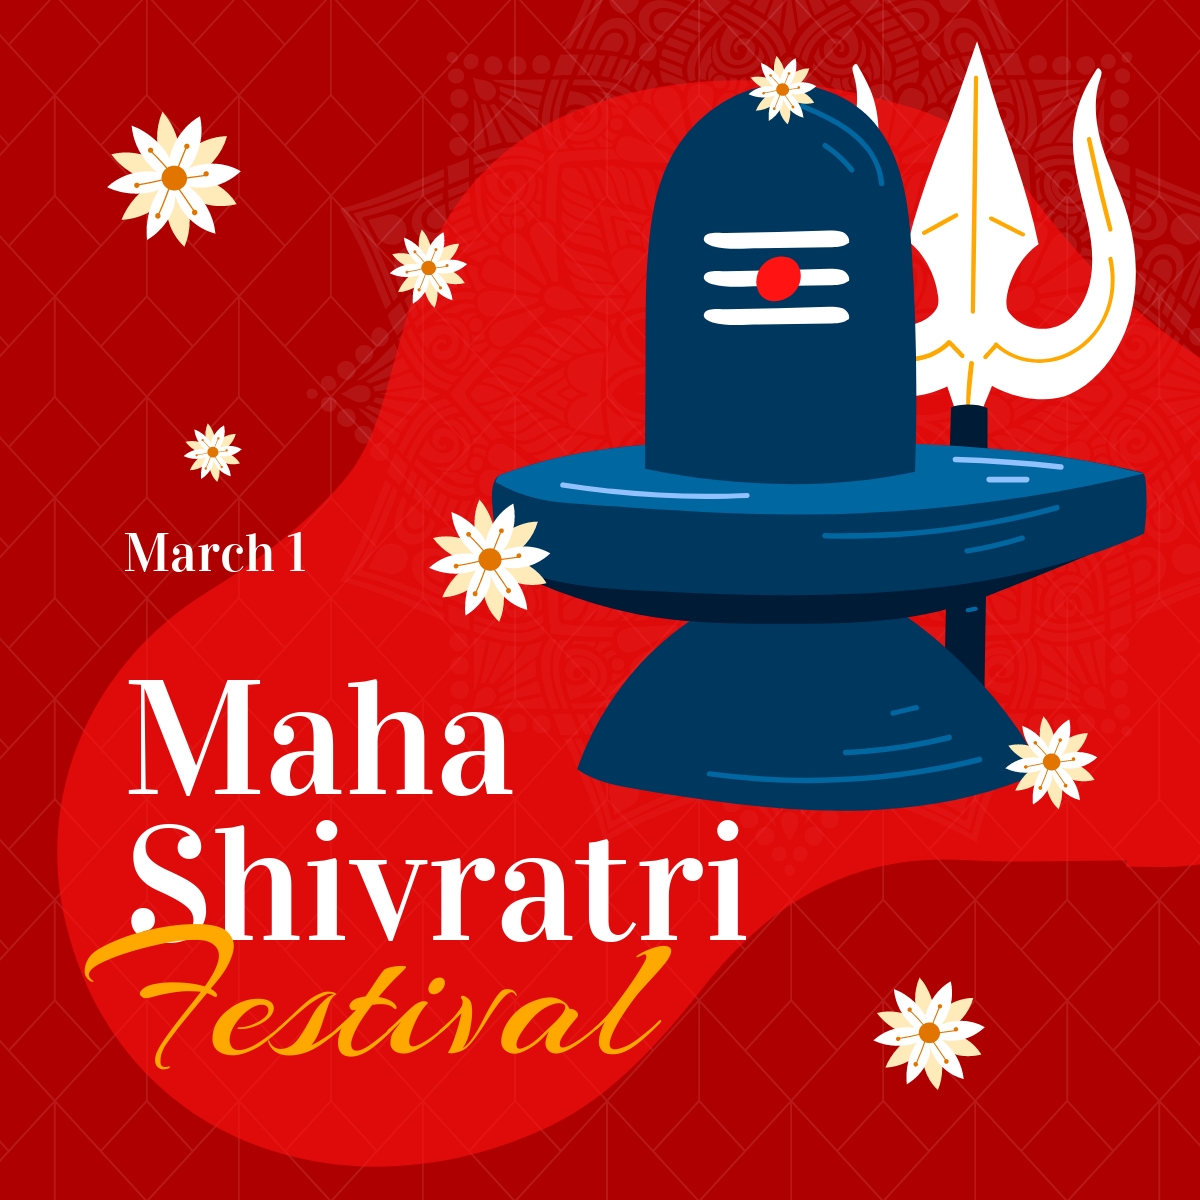 Maha Shivratri Festival Linkedin Post Template